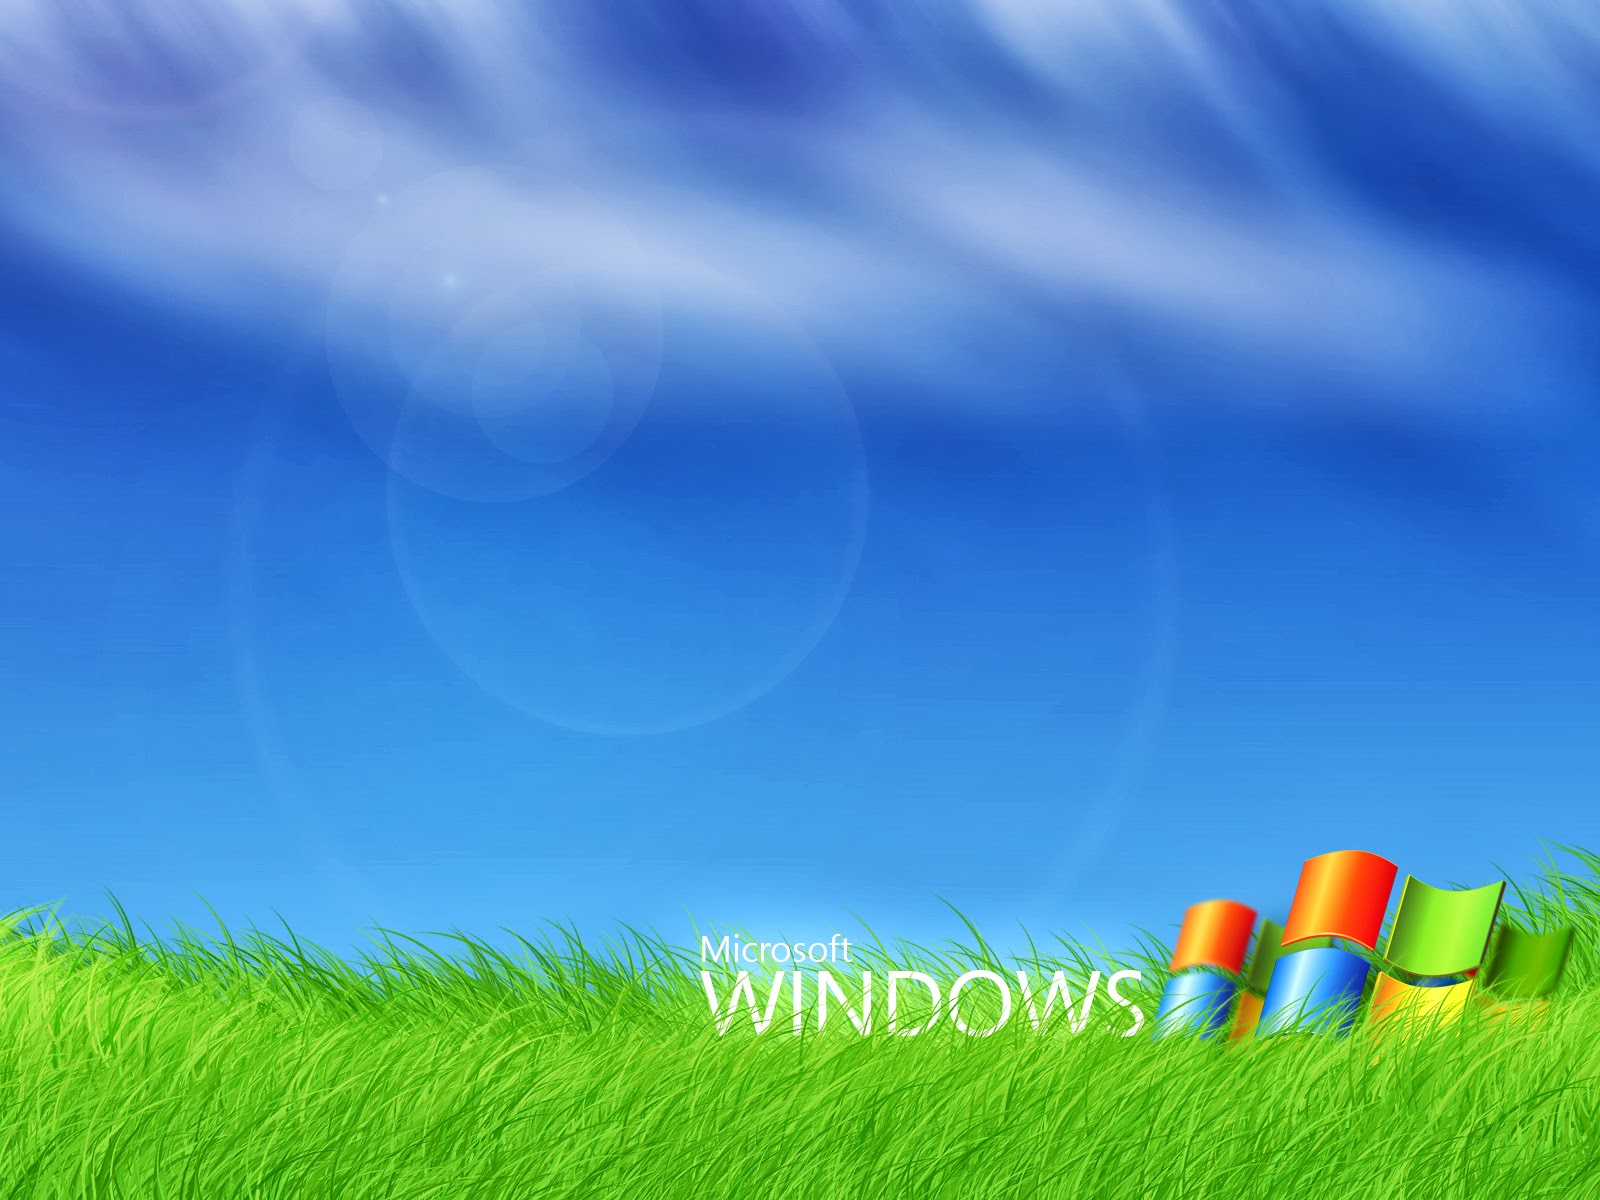 microsoft windows wallpaper free wallpaper screensaver 8 754198jpg 1600x1200